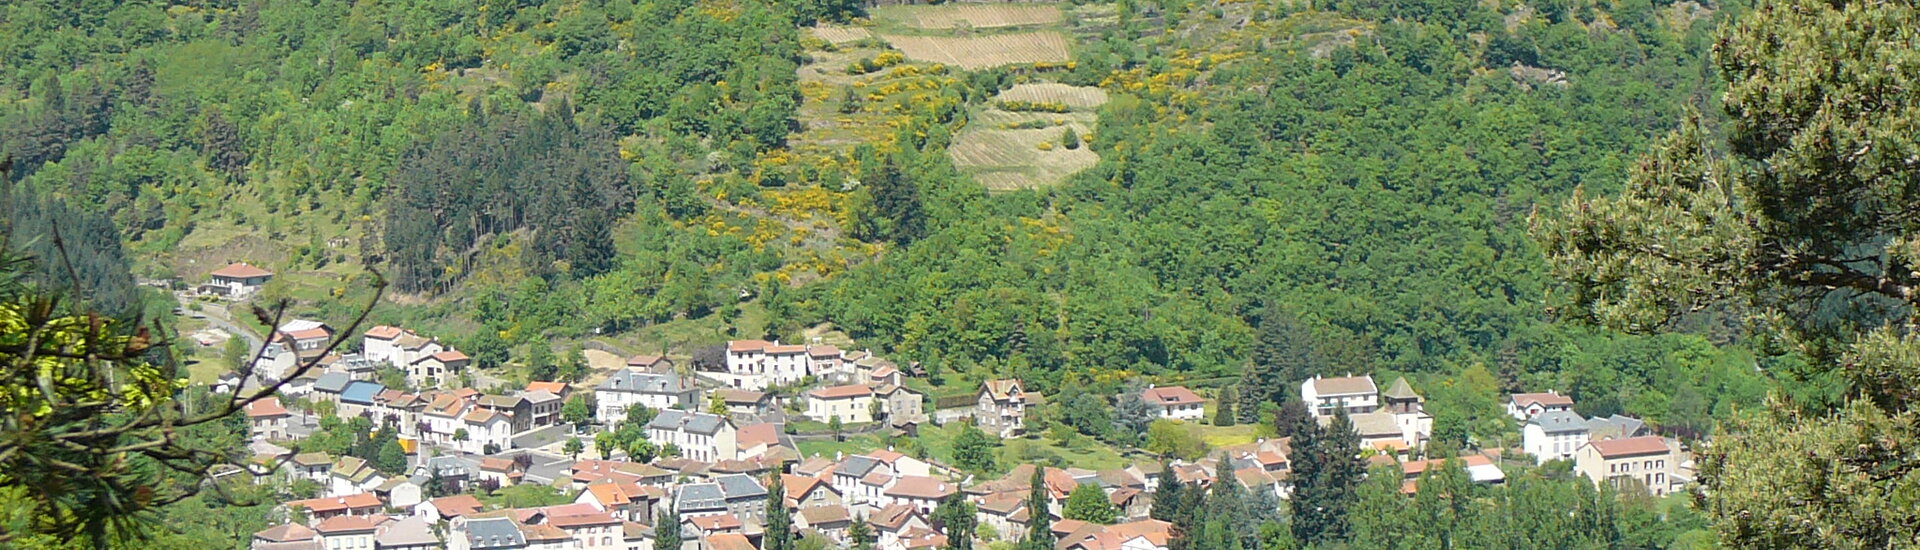 Mairie de Molompize Cantal